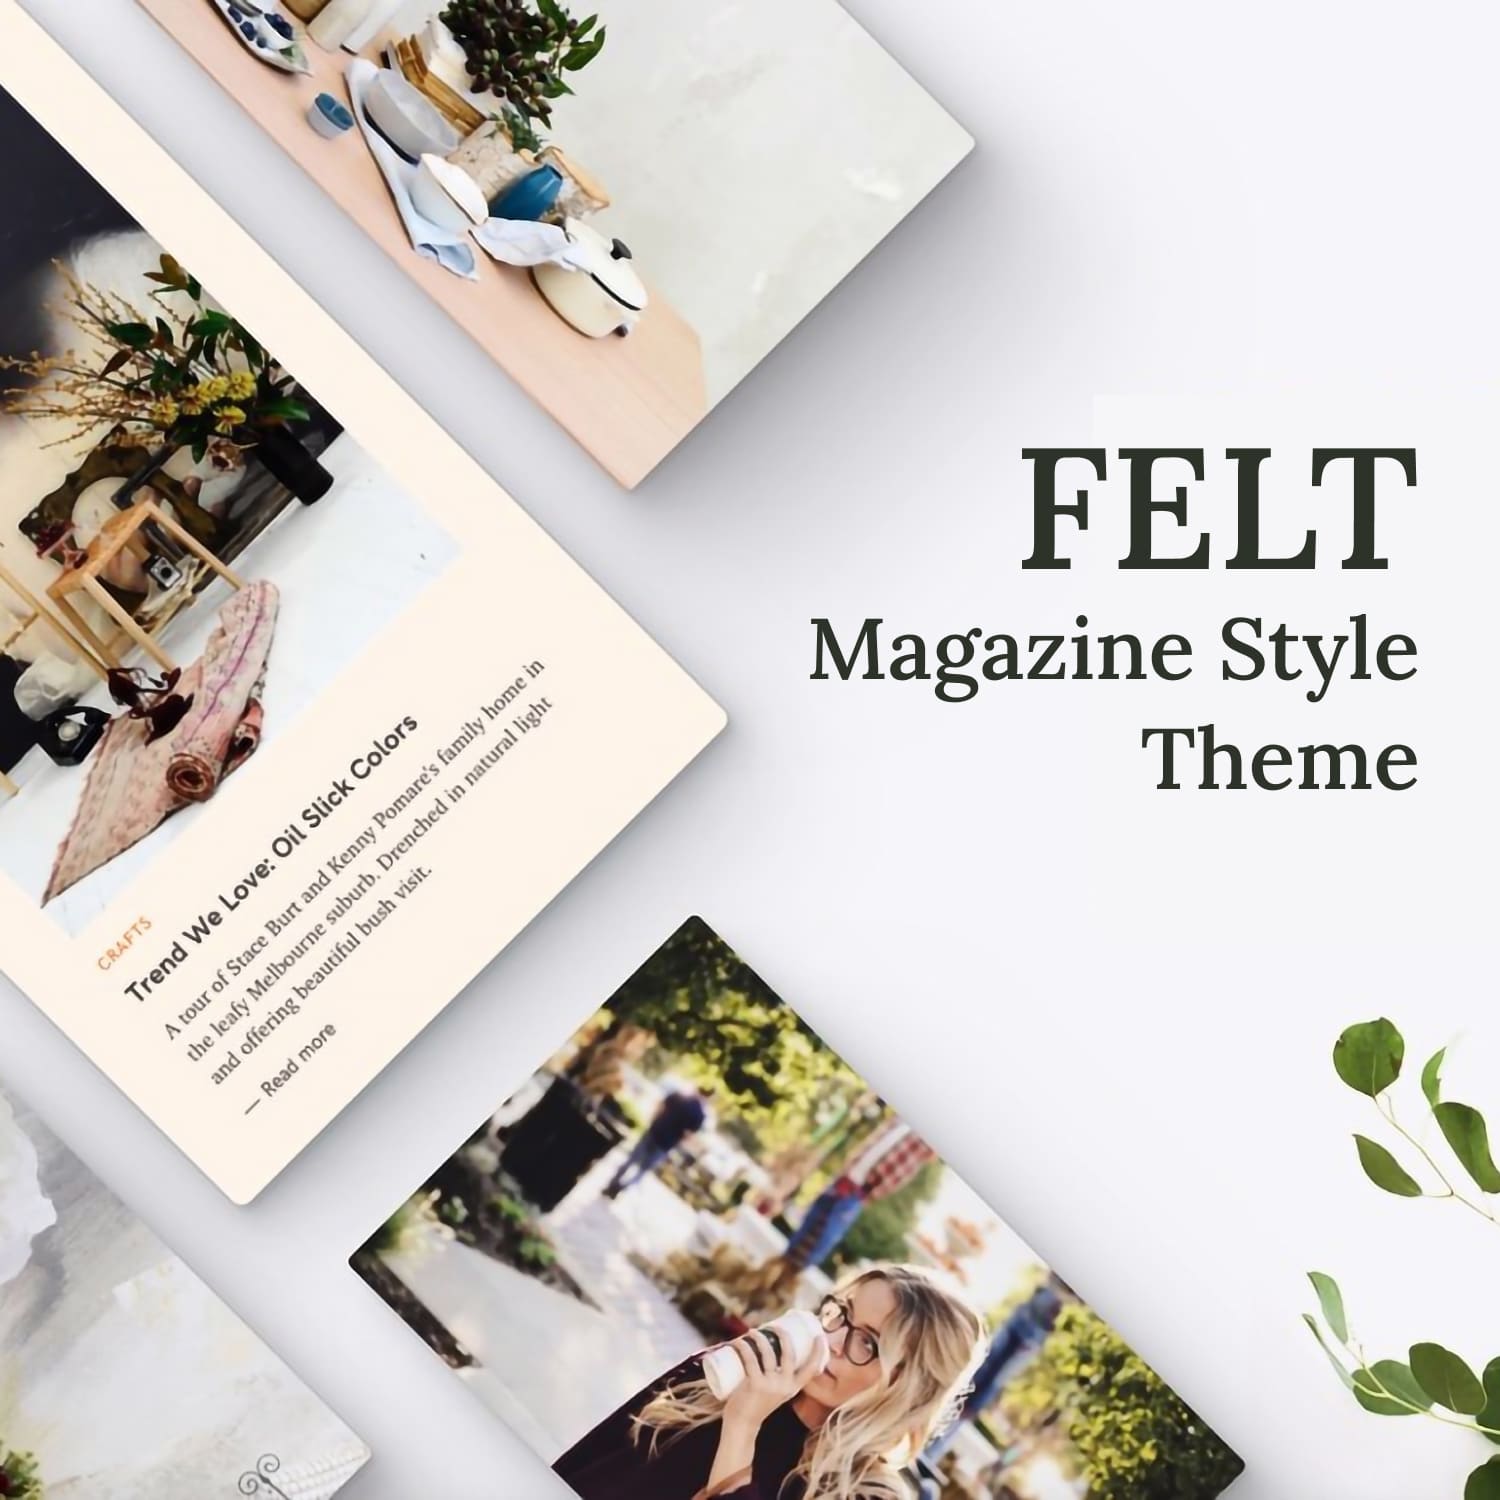 Felt - Magazine Style Theme.